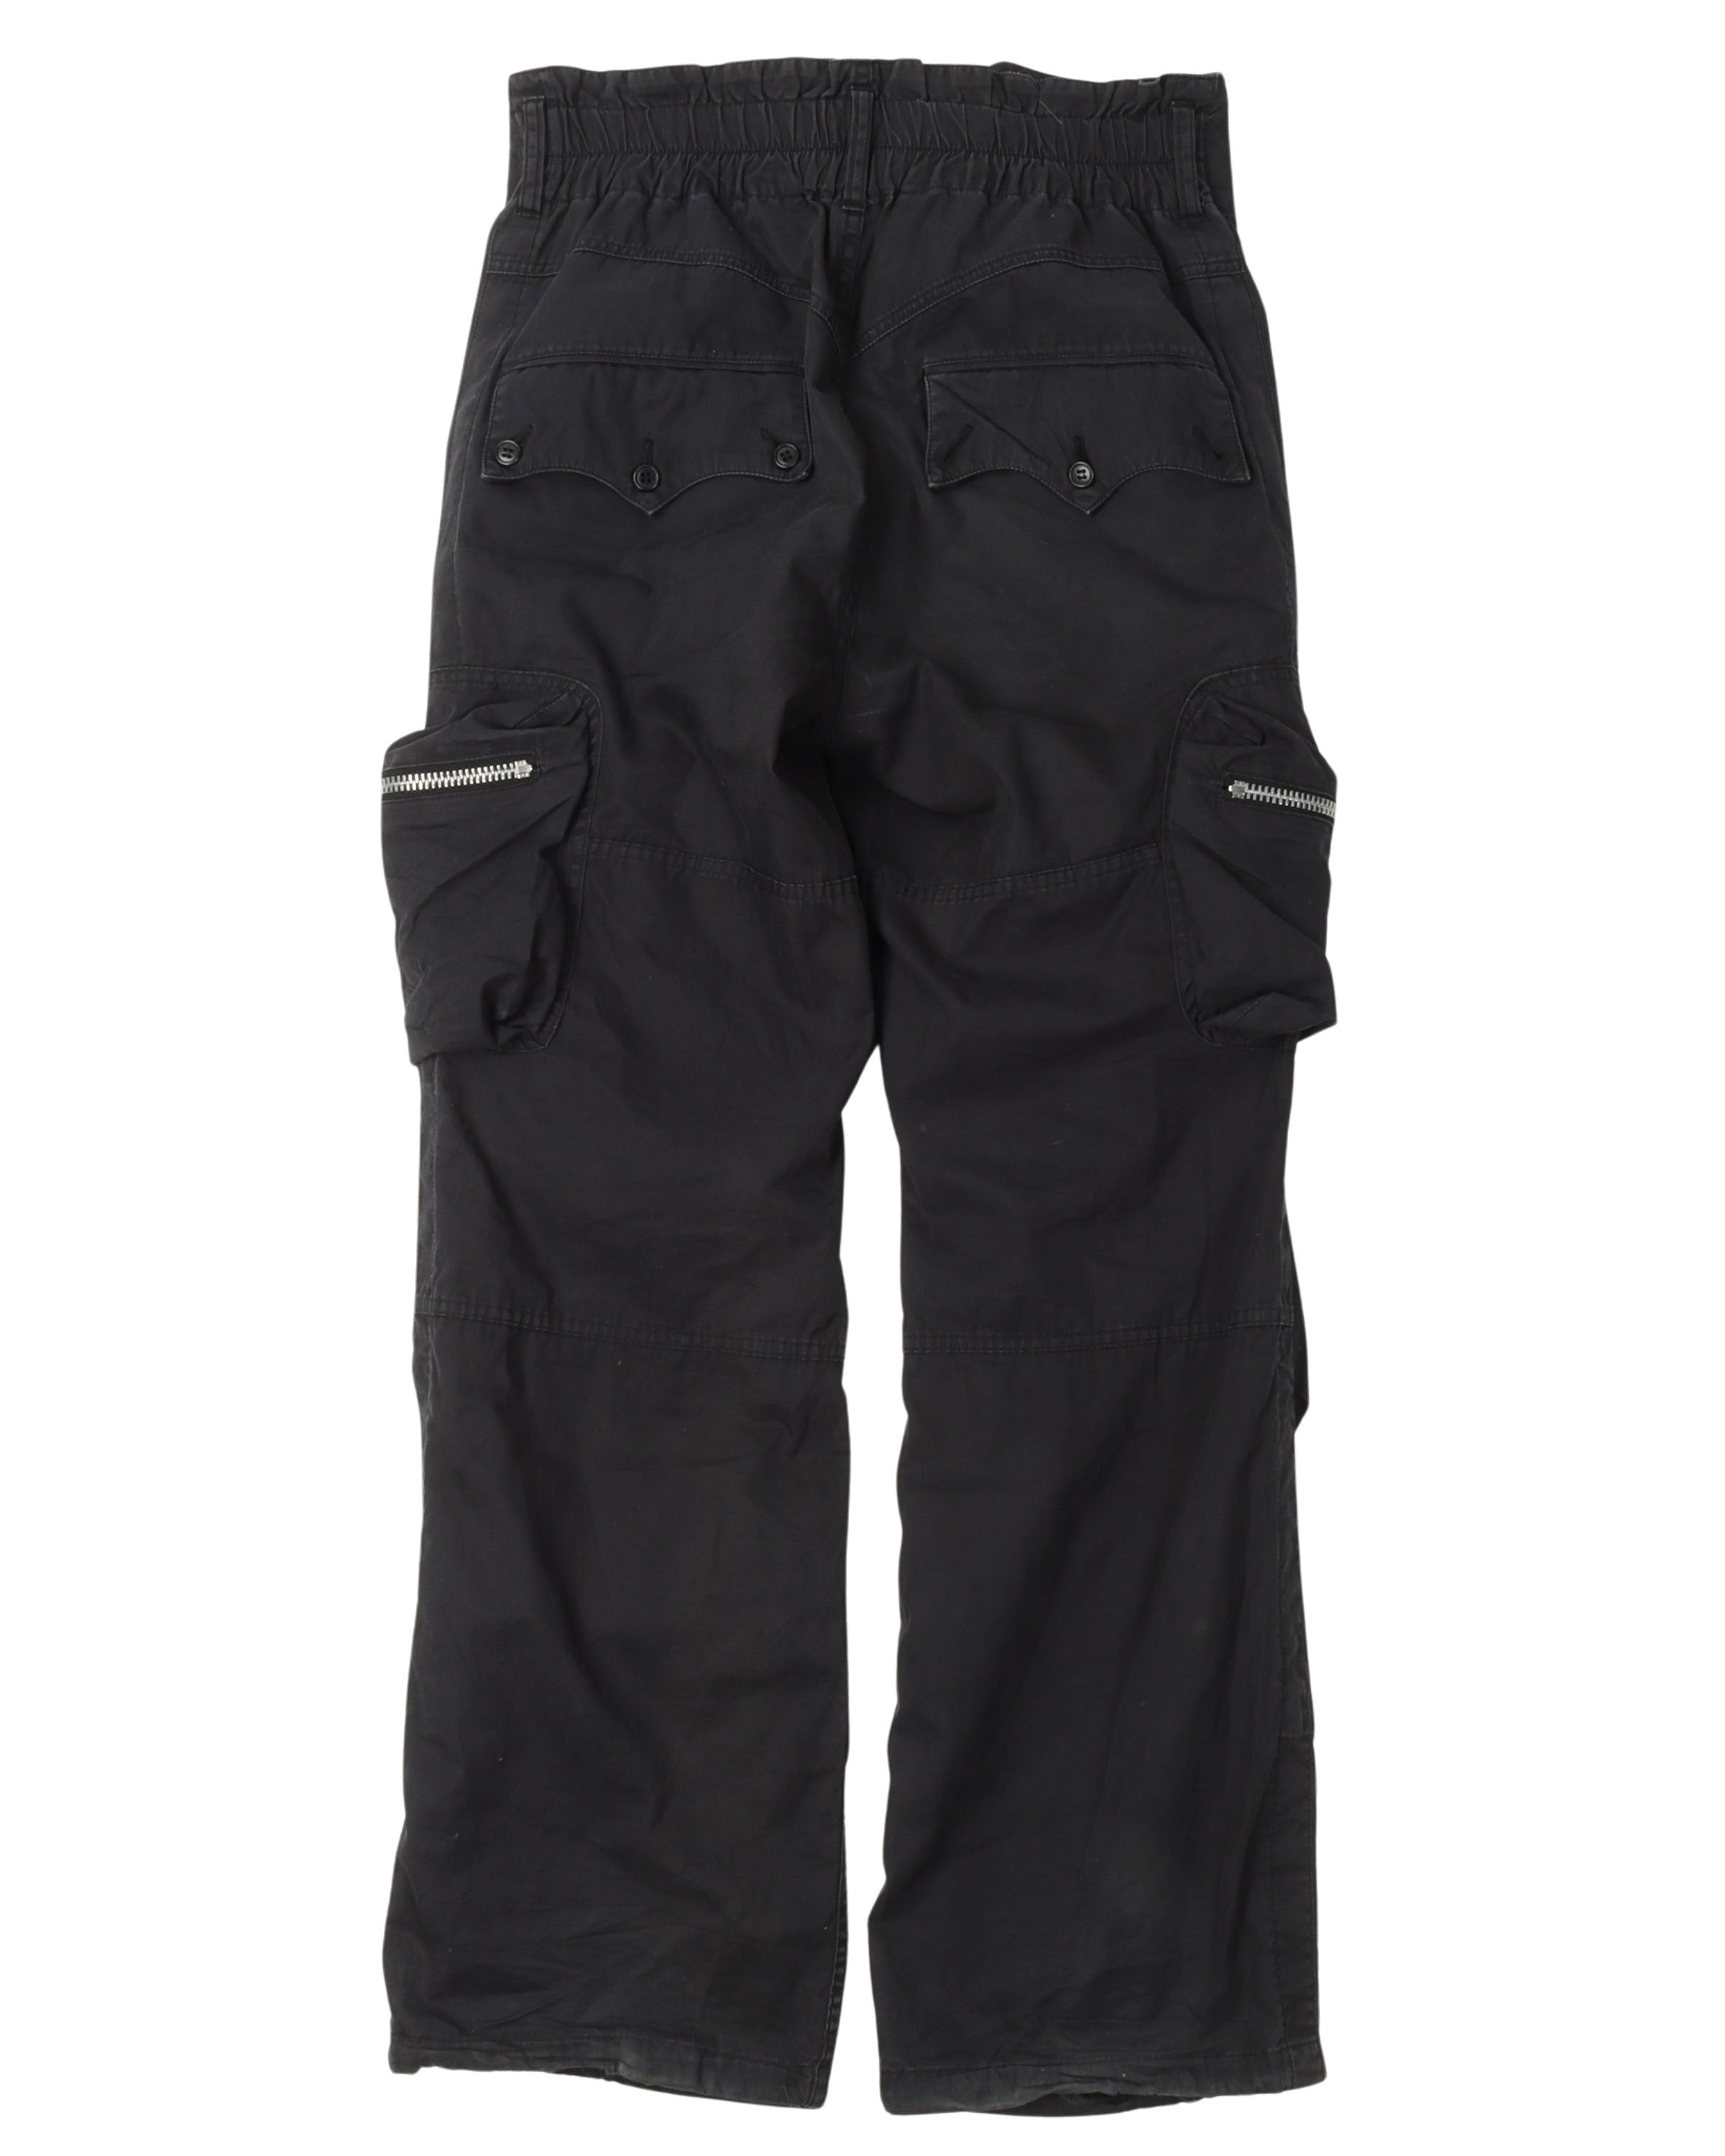 Asymmetrical Zipper Cargo Pants